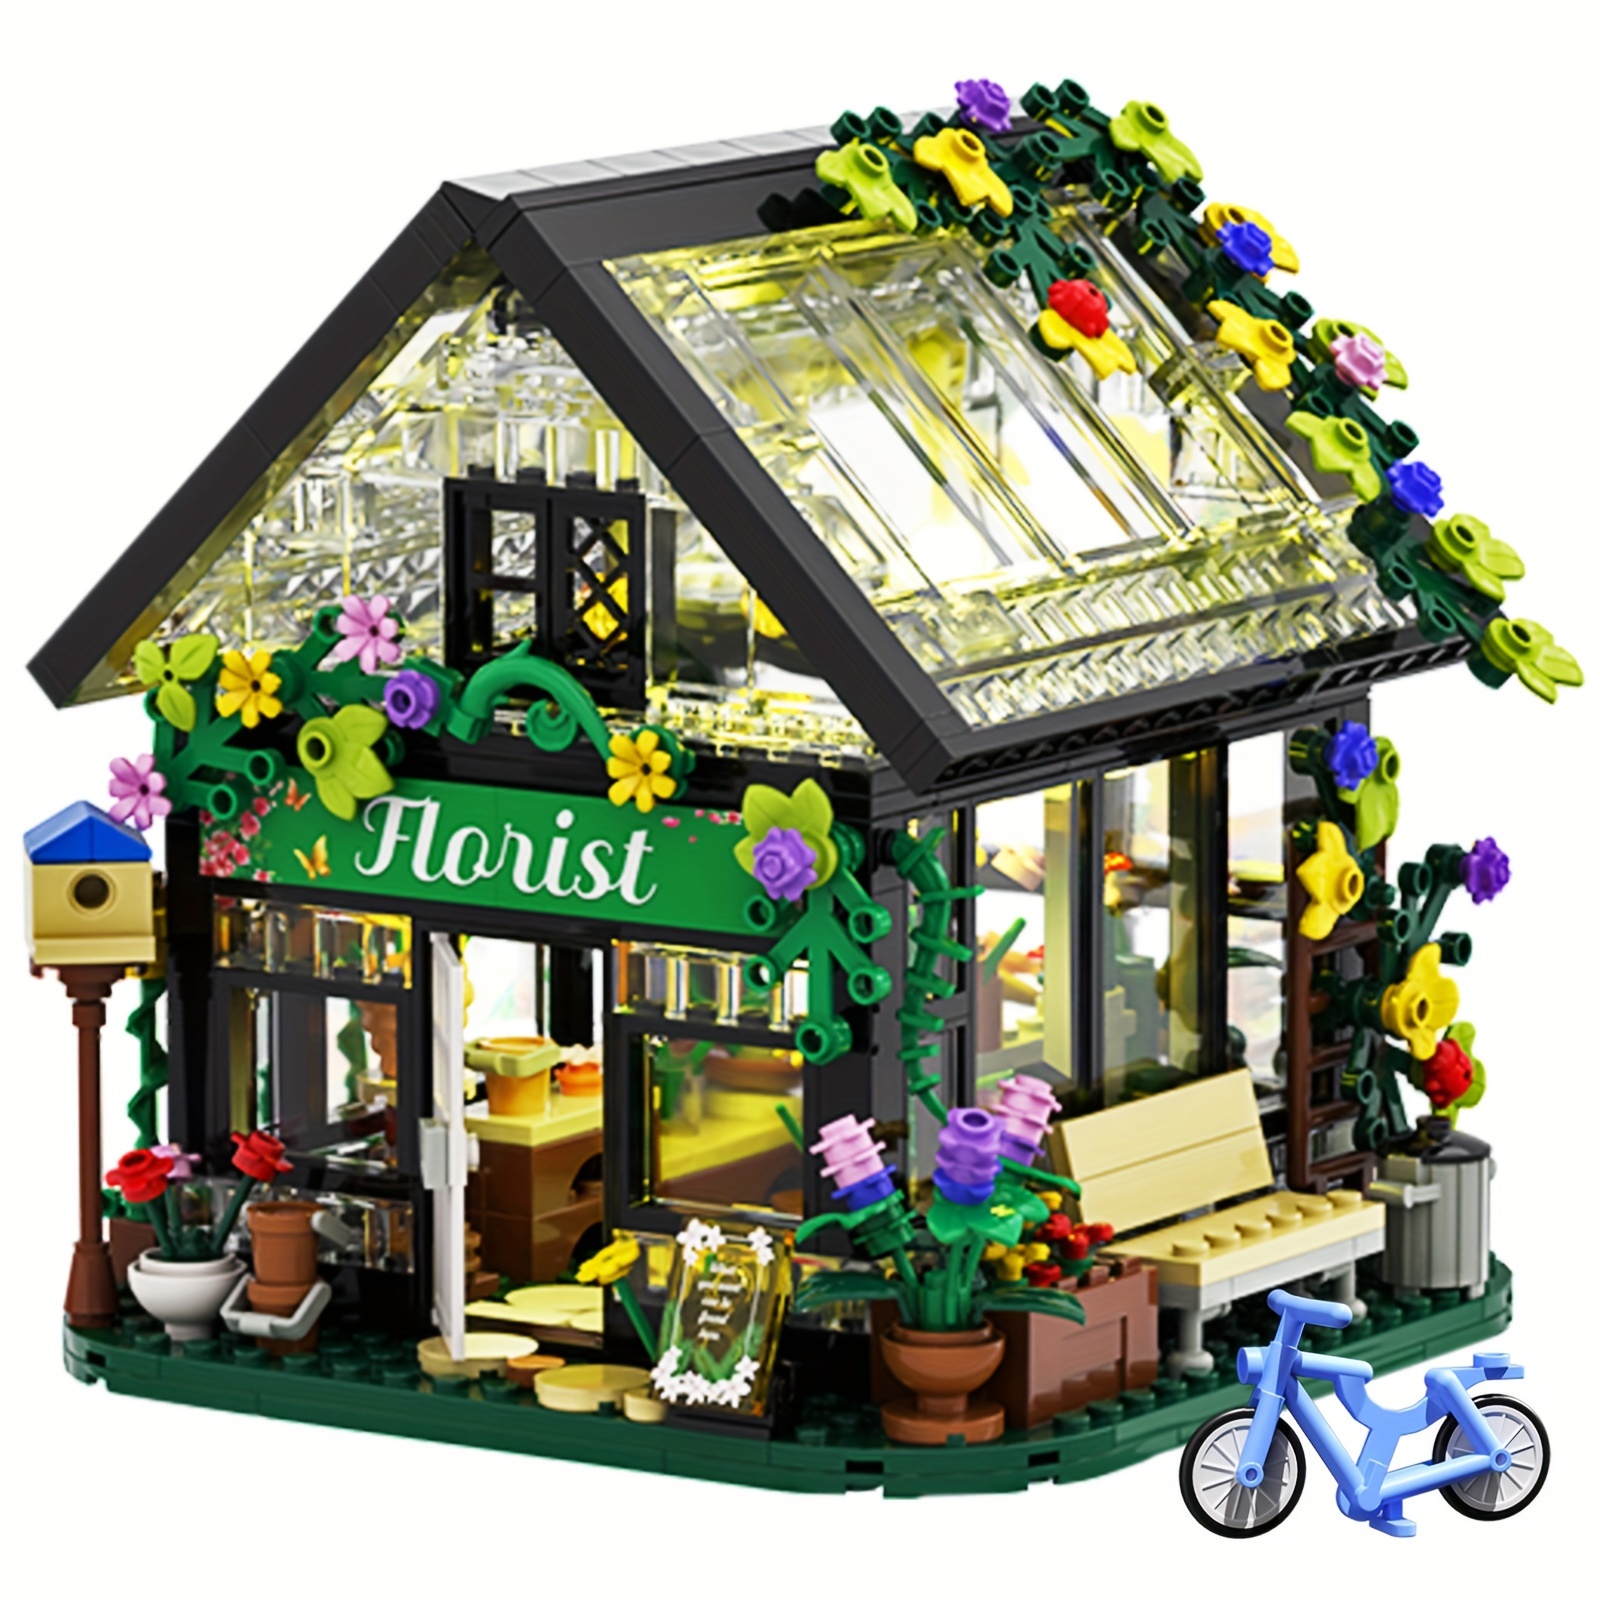 

625pcs Flower House Building Model Set, With Led Lights, Creative Building Blocks Set, Educational Toys